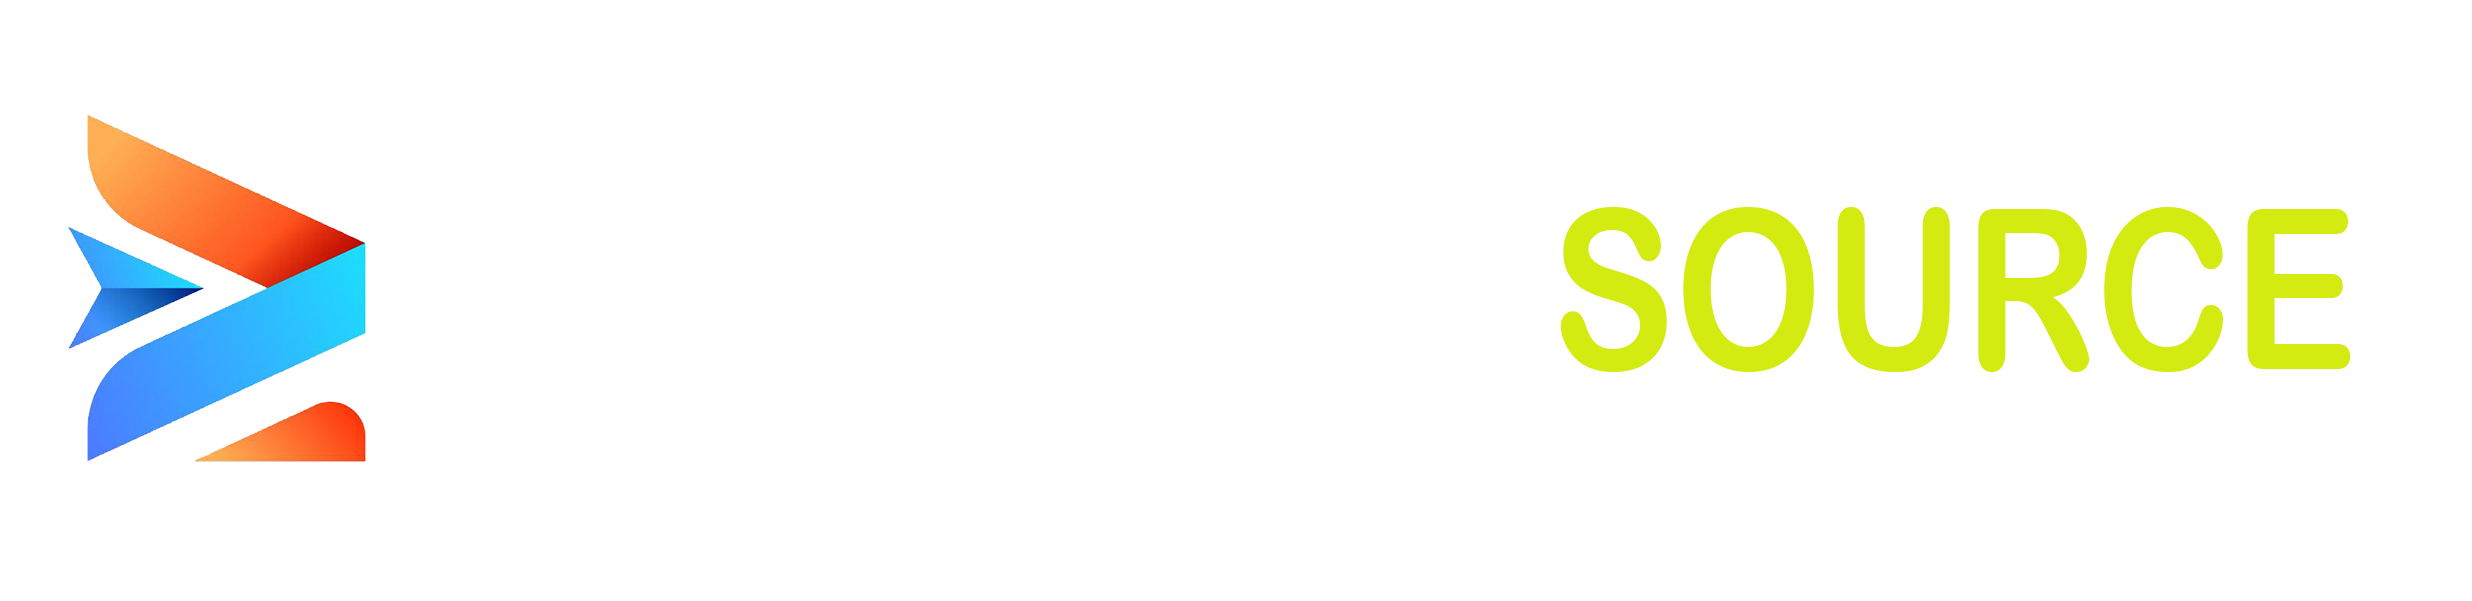 financial source logo